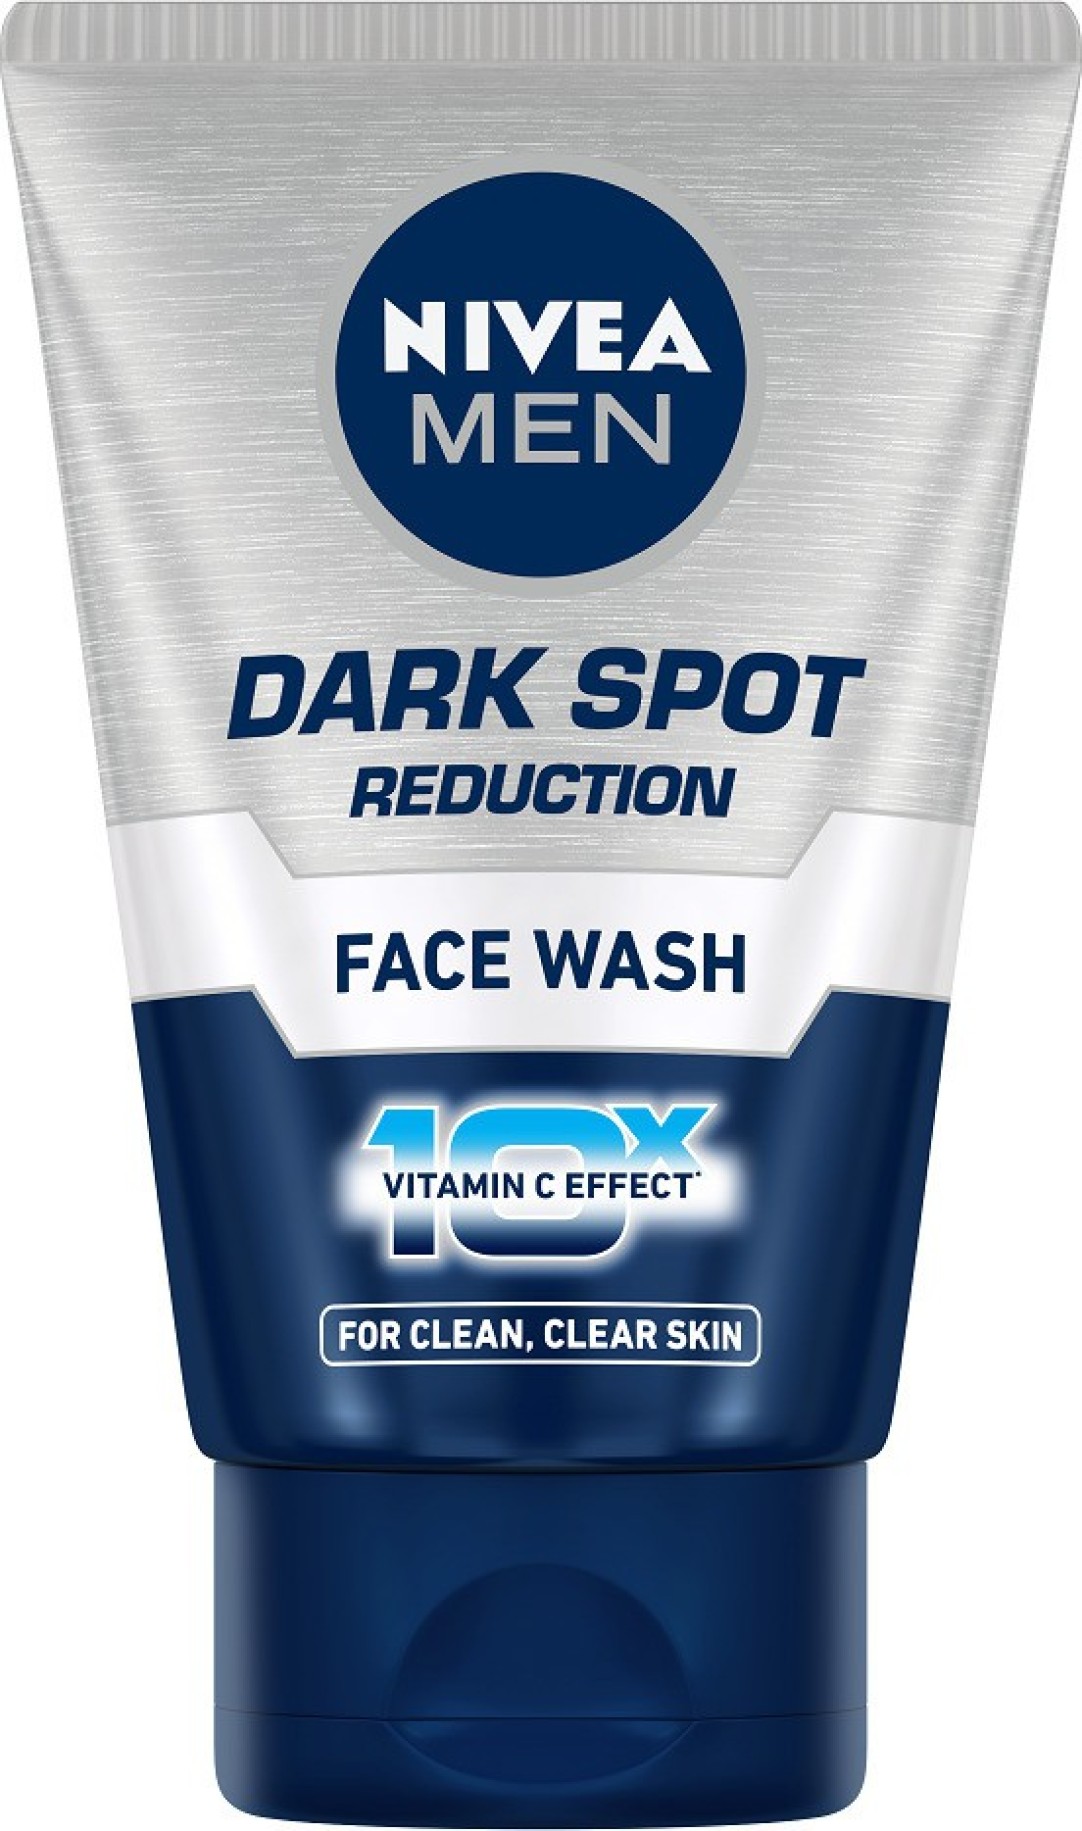 NIVEA MEN Dark Spot Reduction Face Wash (100g)